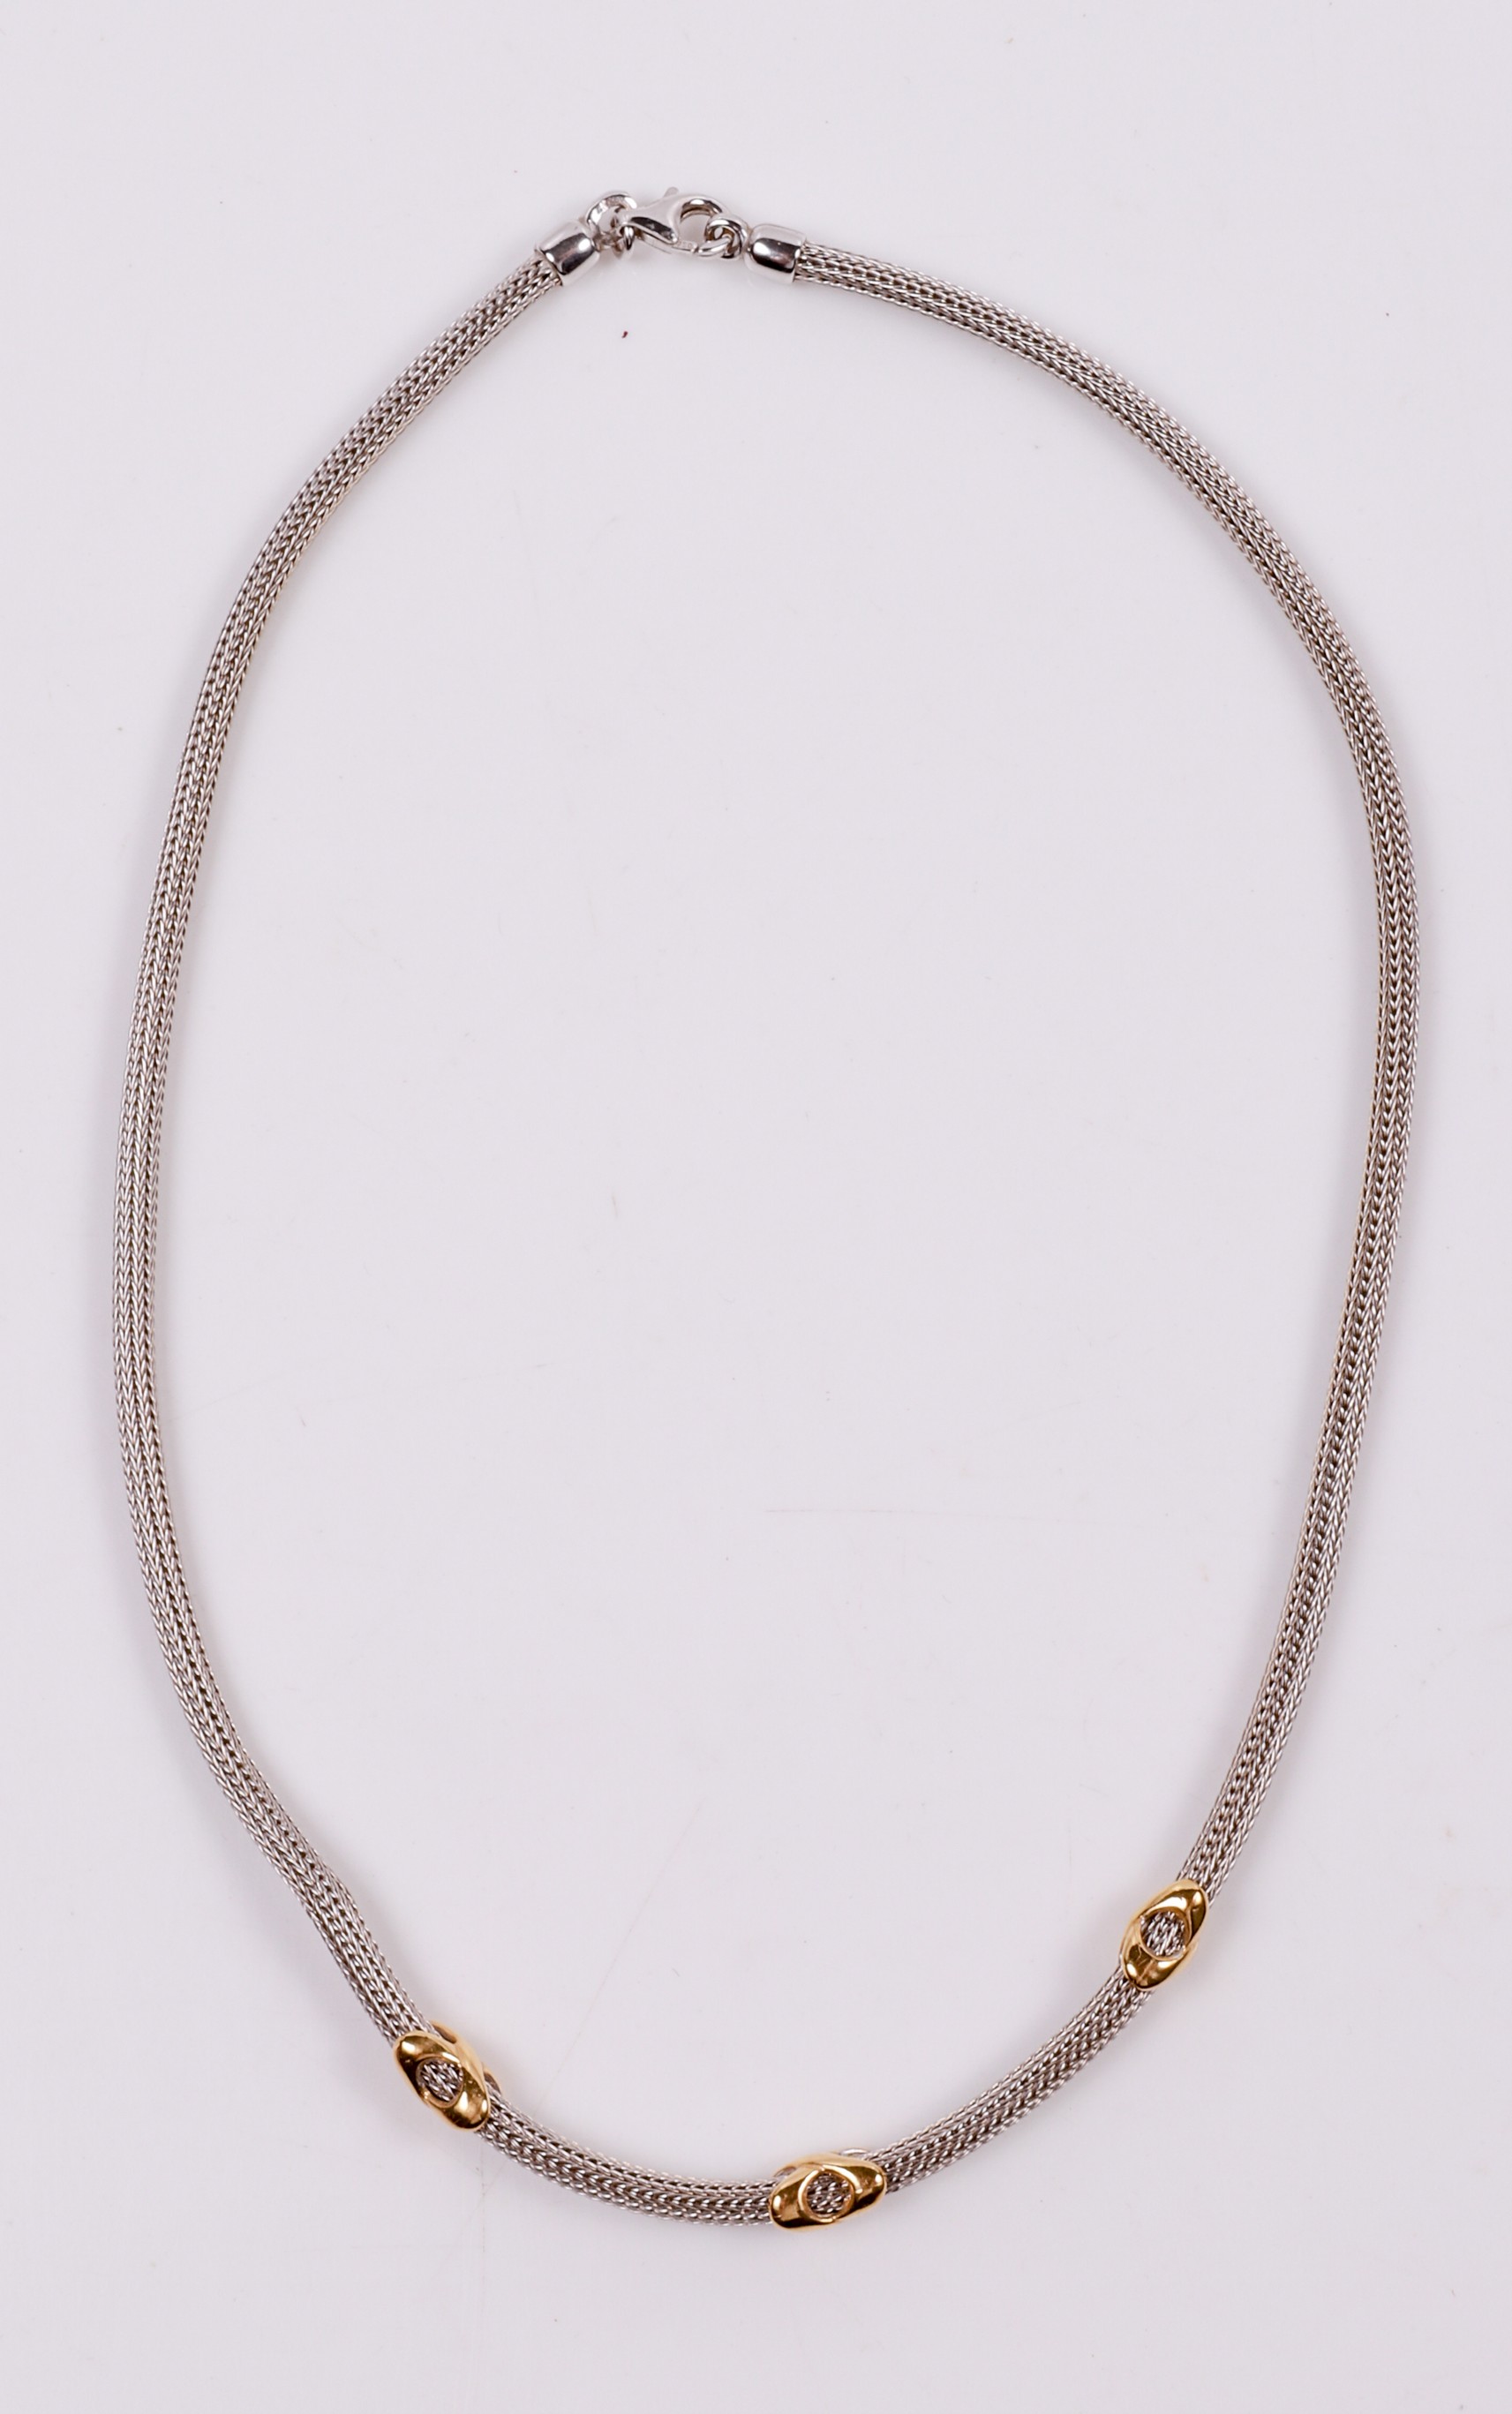  1 18K white gold mesh necklace  3b6017